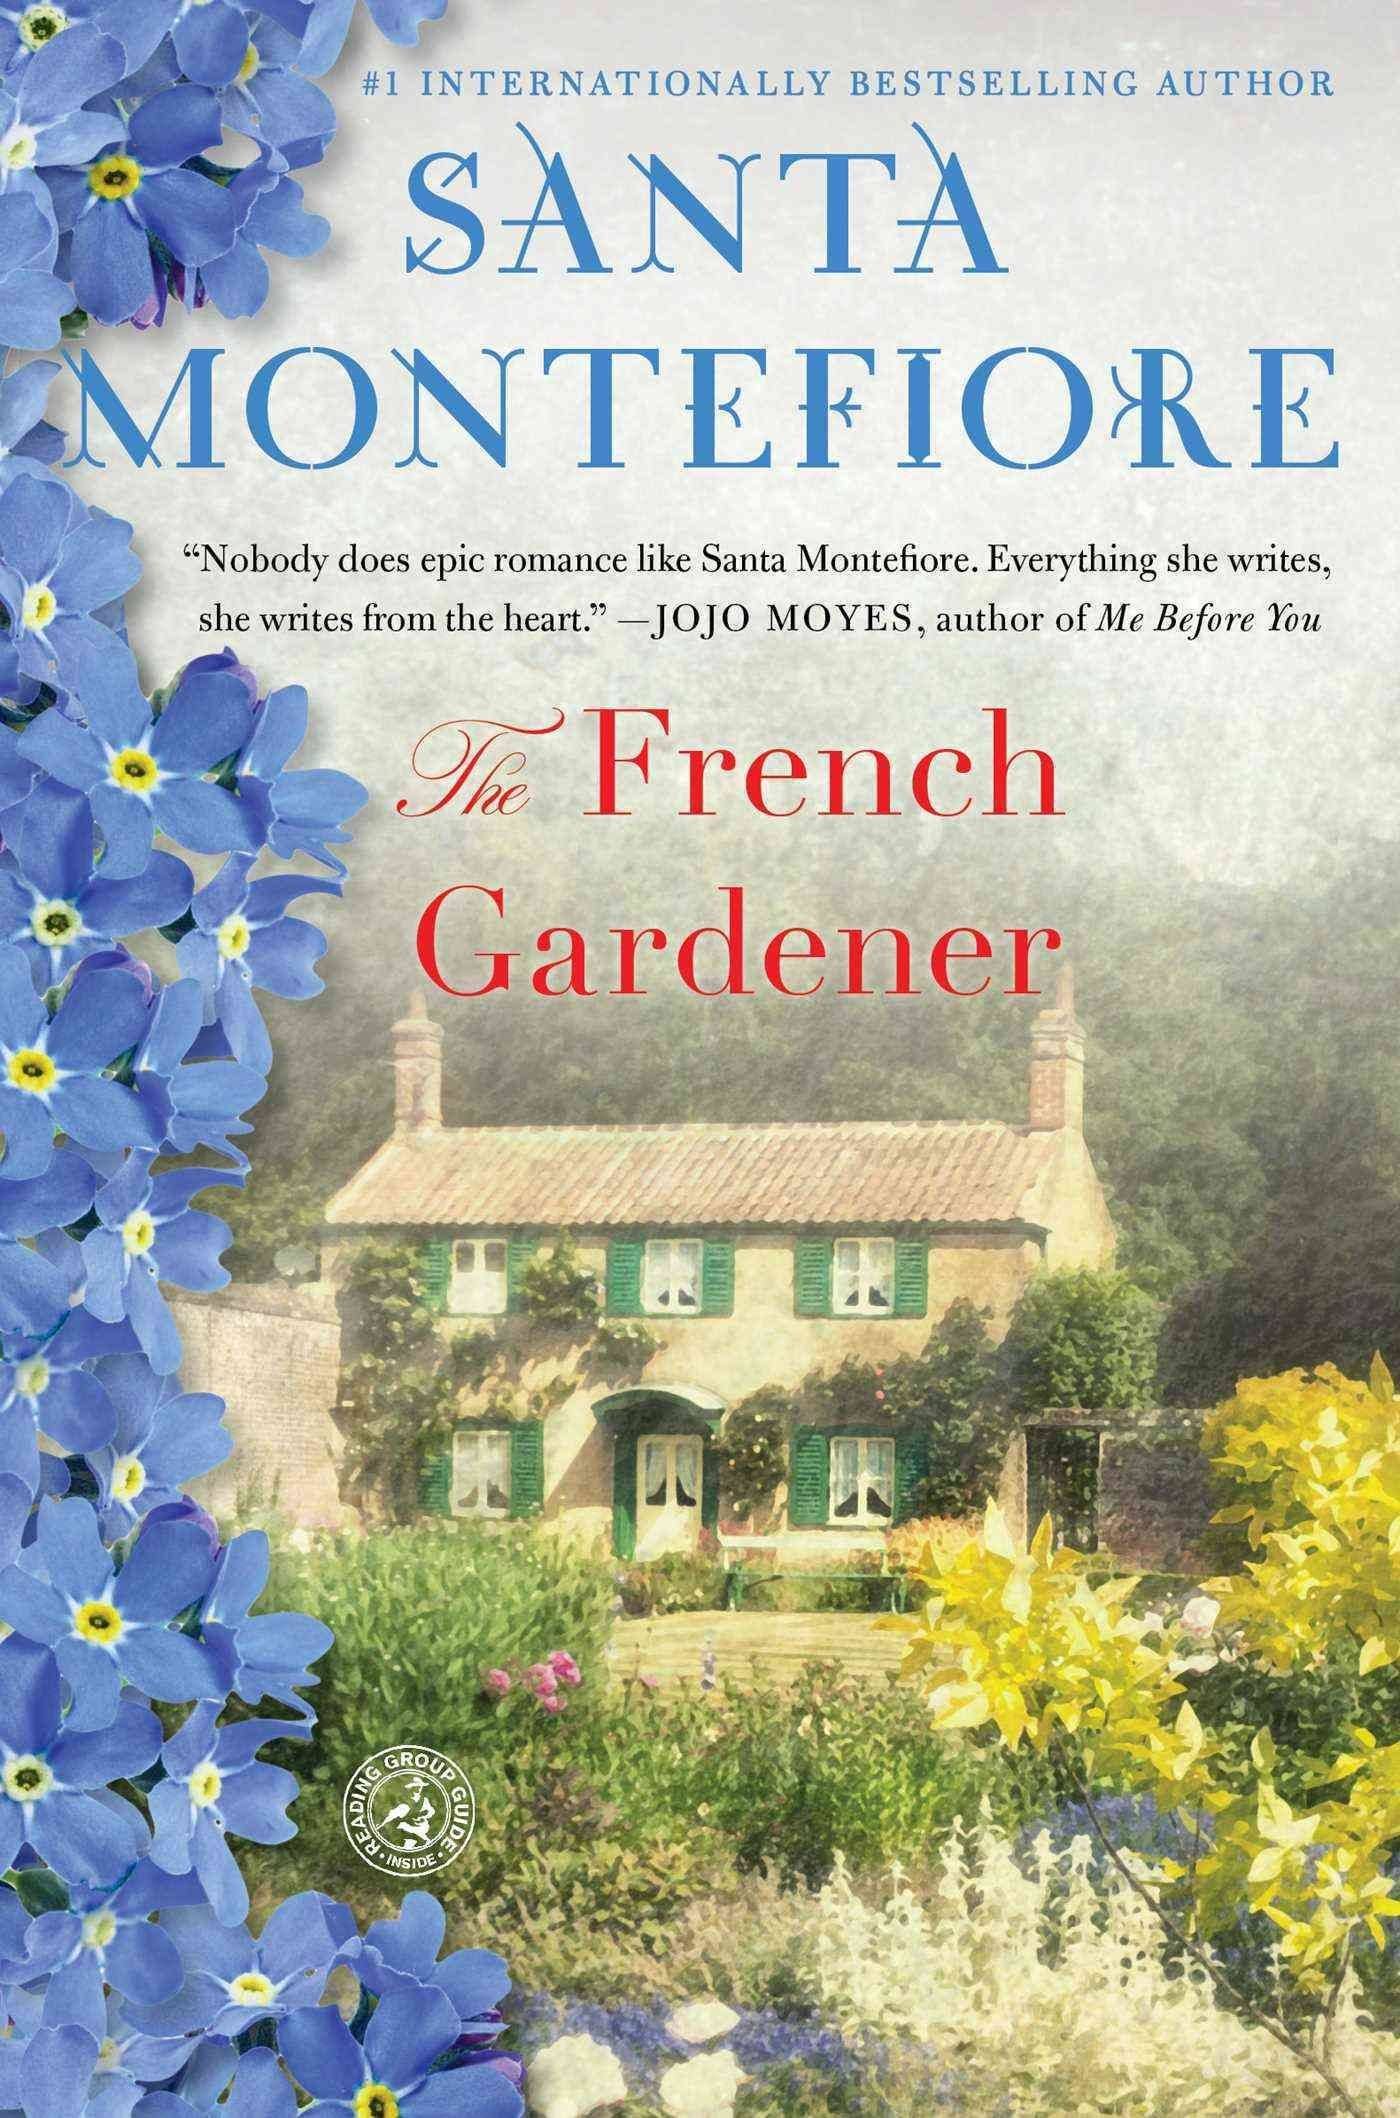 The French Gardener: A Novel [Book]